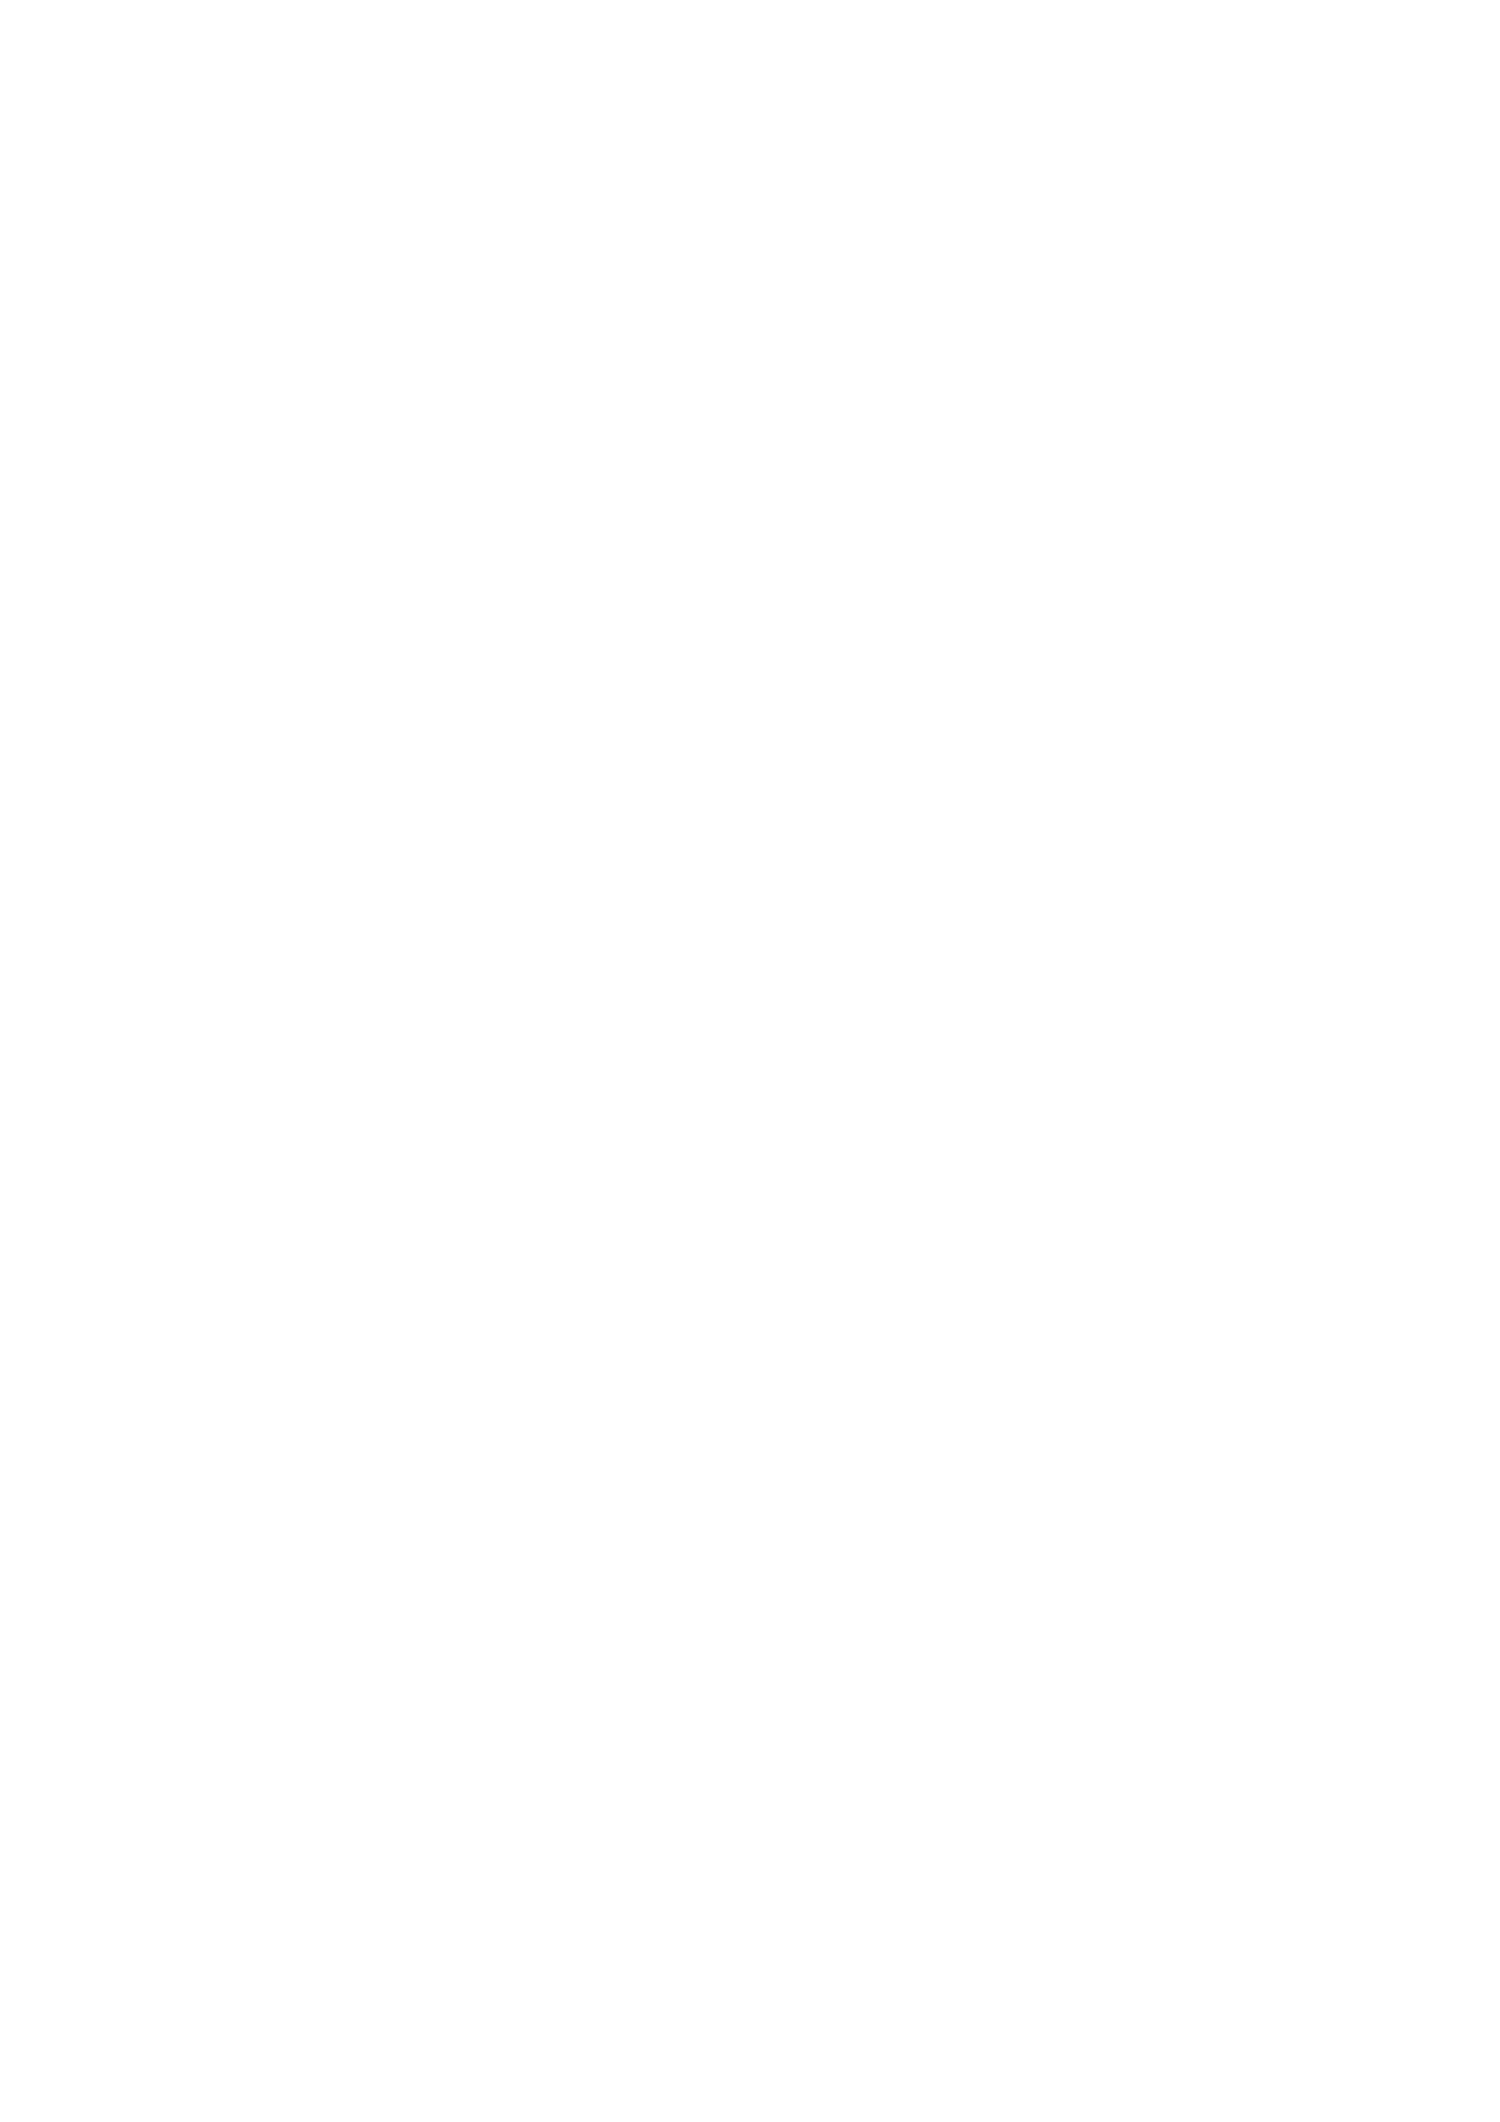 Tūhourangi Tribal Authority 